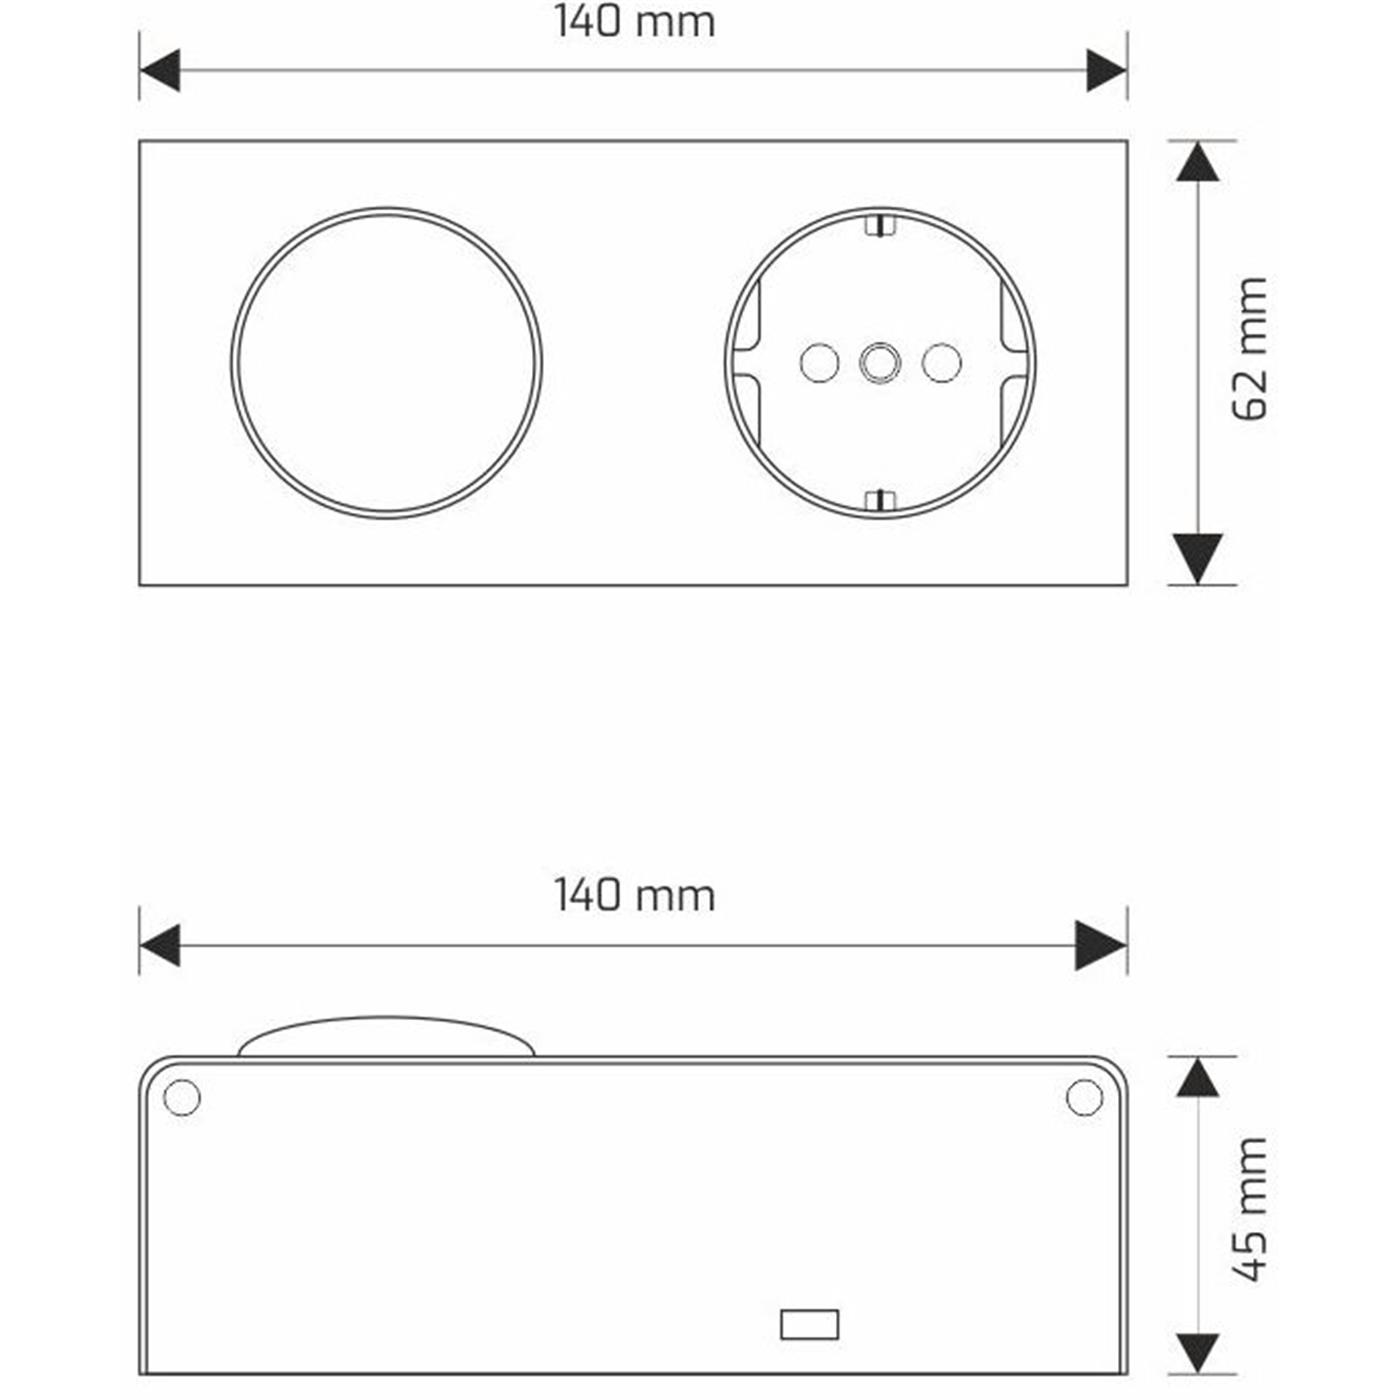 MiniBox Schalter + 1x Schuko Steckdose Tischsteckdose IP20 Aluminium